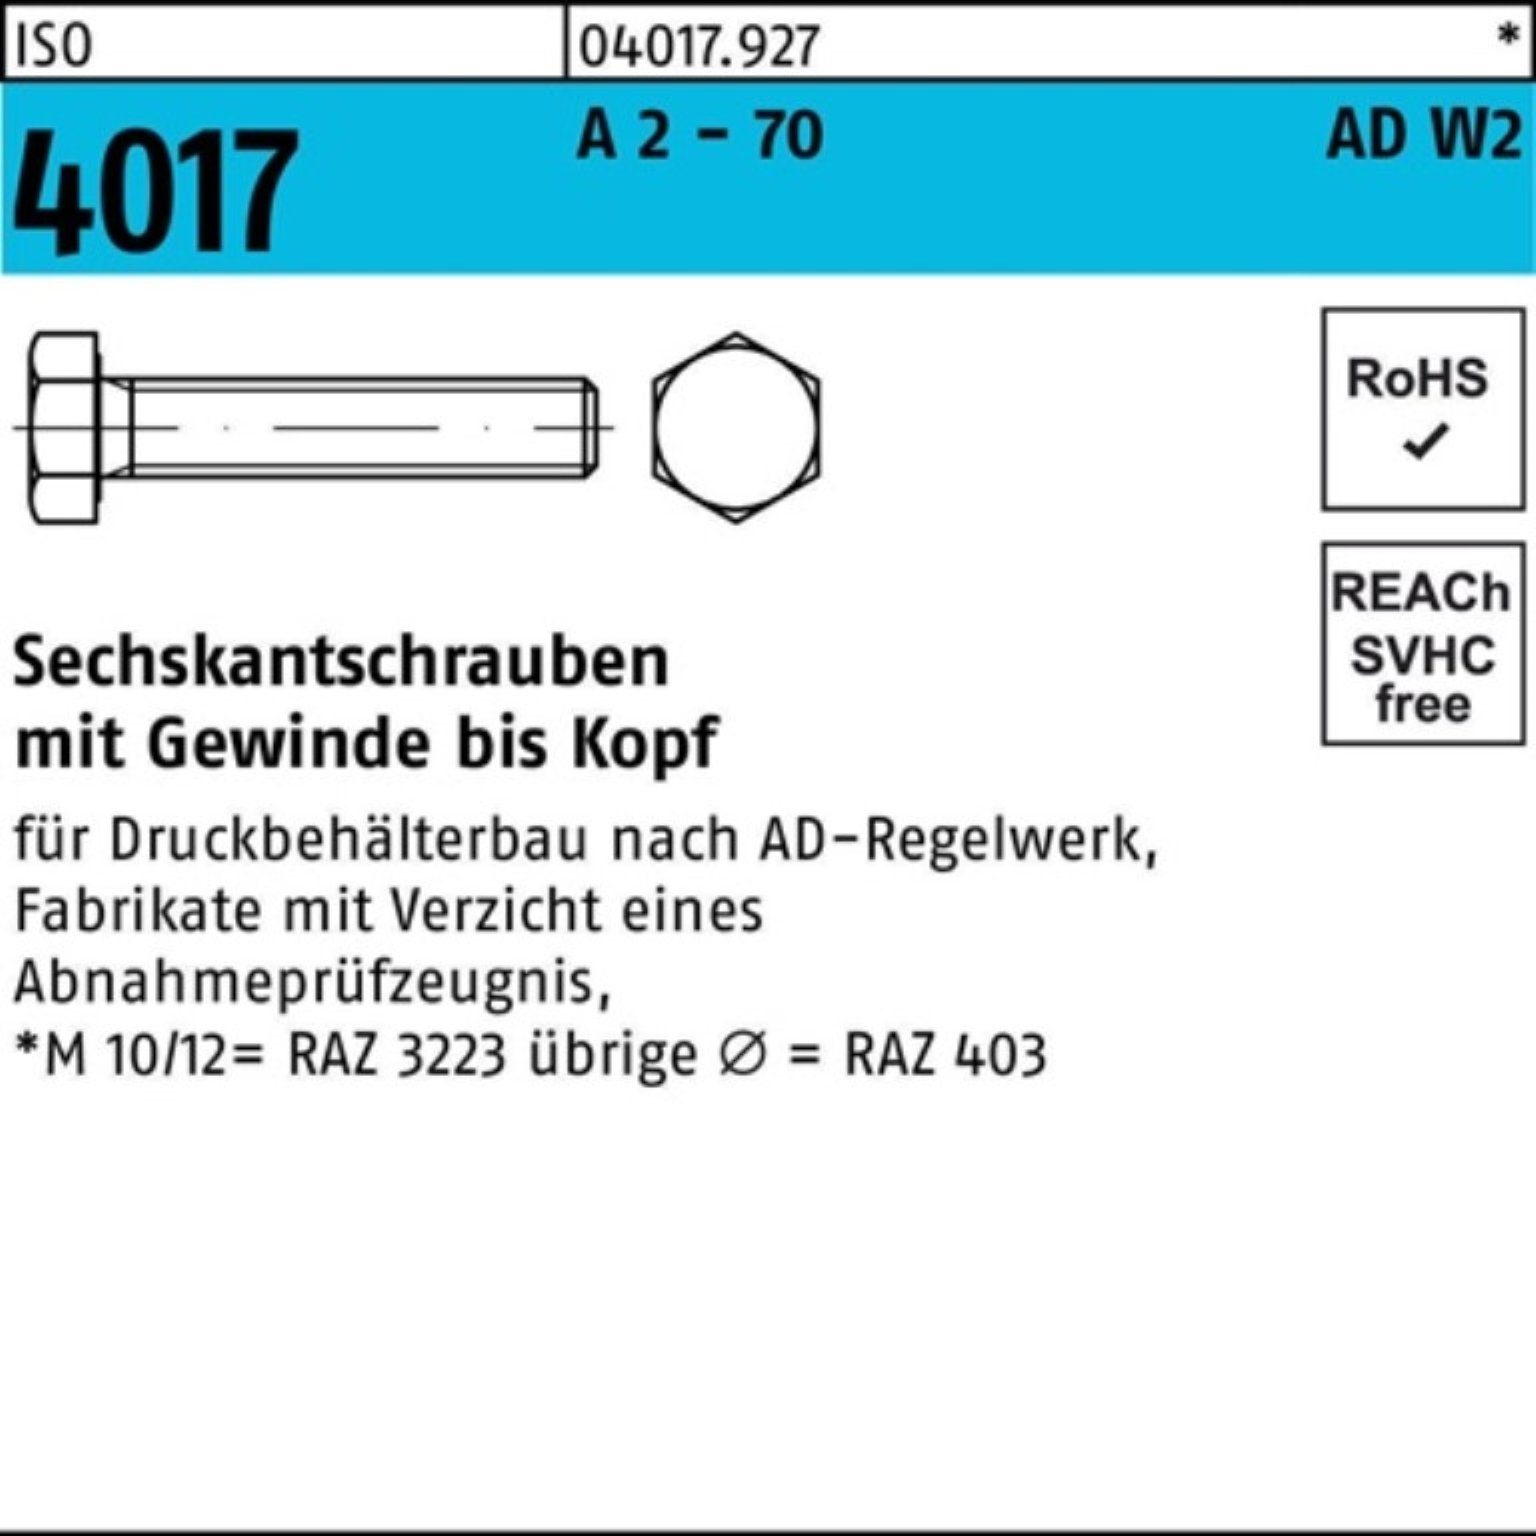 Bufab Sechskantschraube 100er Pack Sechskantschraube ISO 4017 VG M20x 90 A 2 - 70 AD-W2 25 St